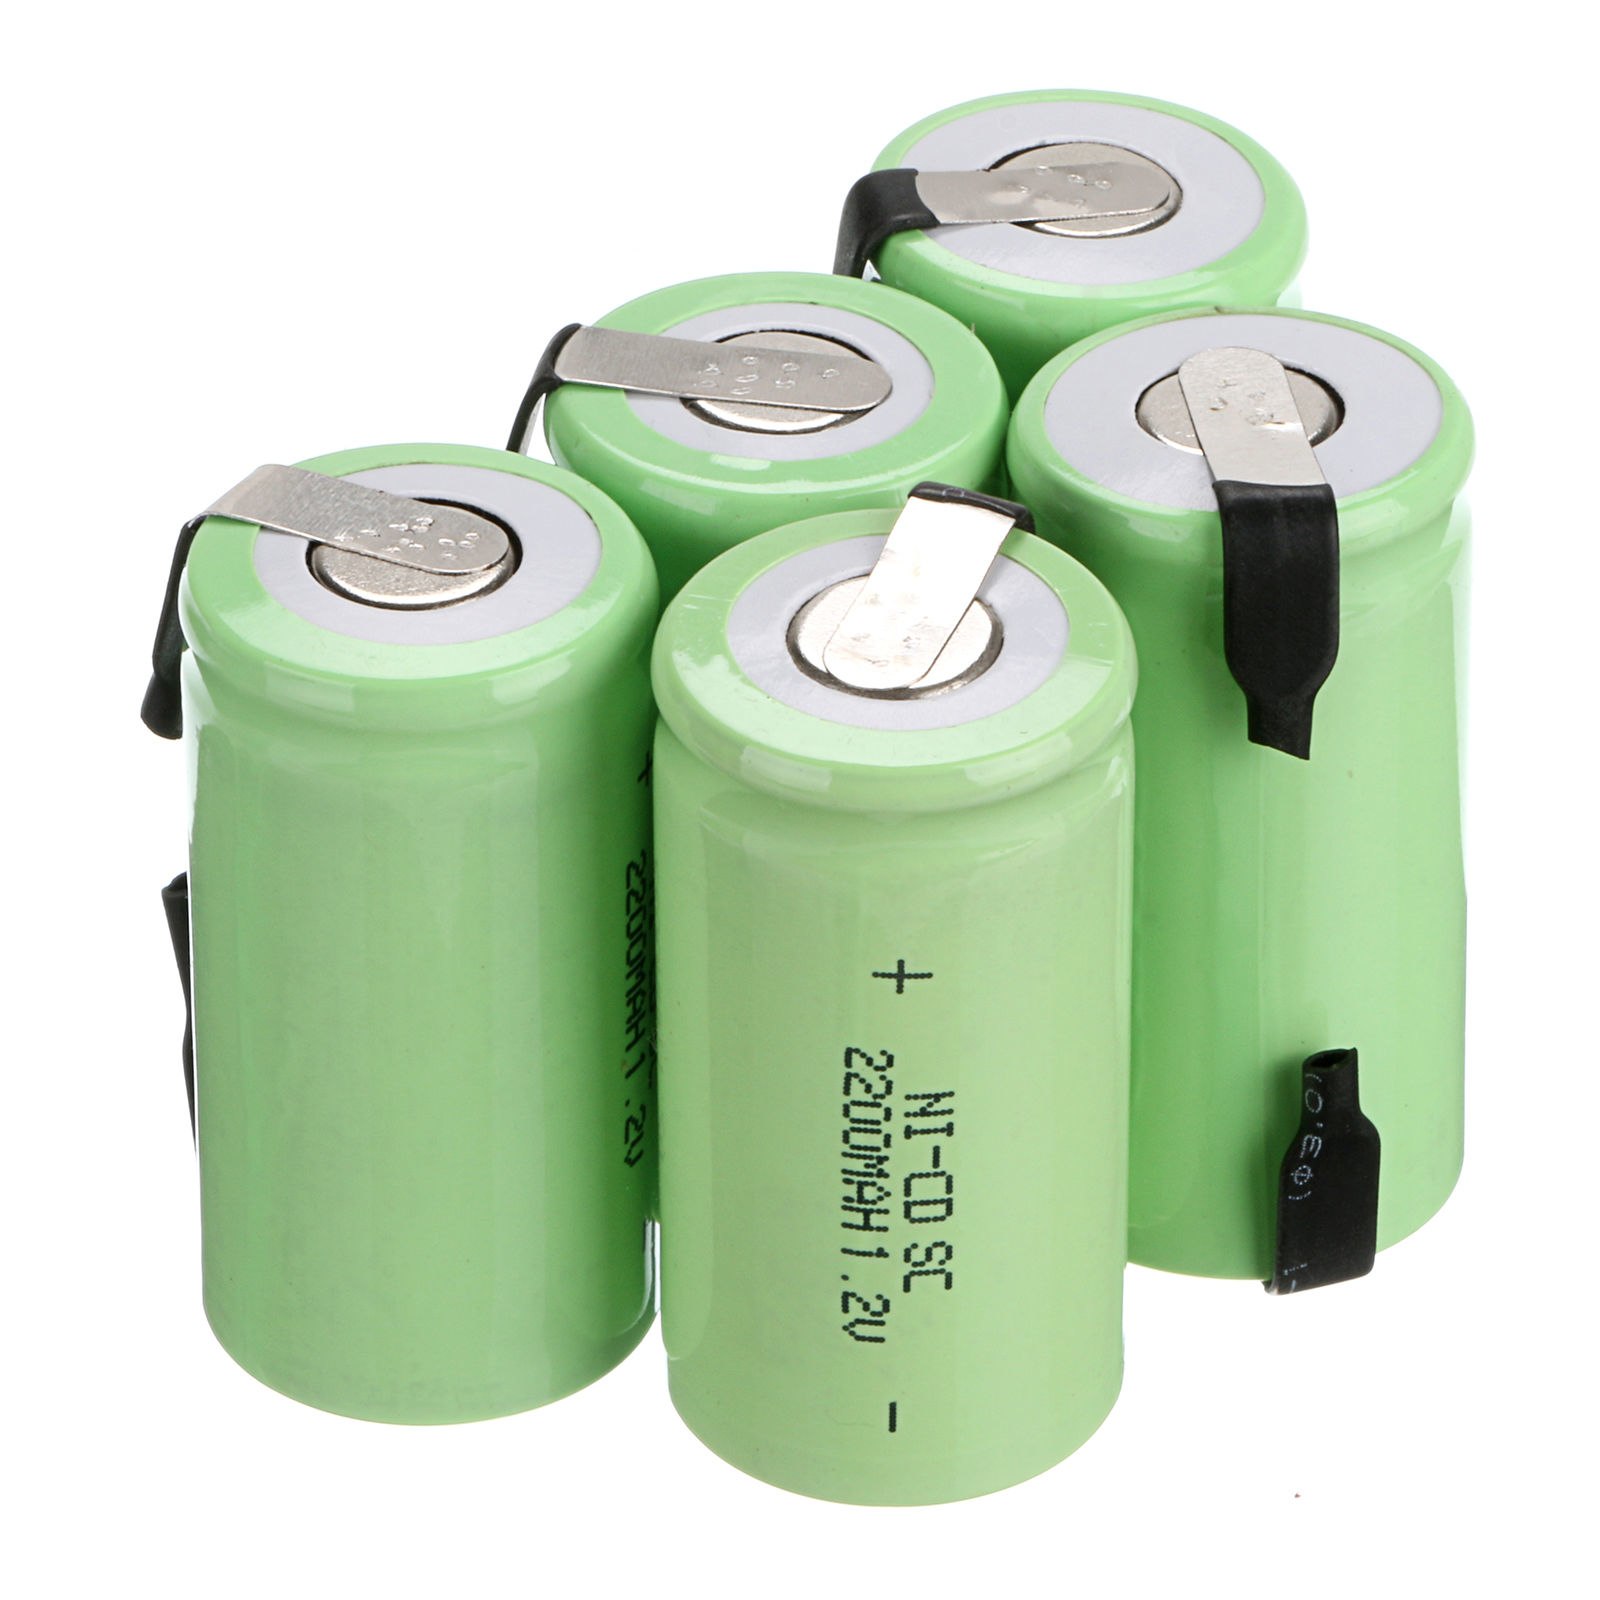 Cd battery. Аккумуляторы никель-кадмиевые 1.2. Аккумуляторная батарея 1.2 v 18000mah. NICD батареи 1.2 v. Никель кадмиевые ni CD аккумуляторы.